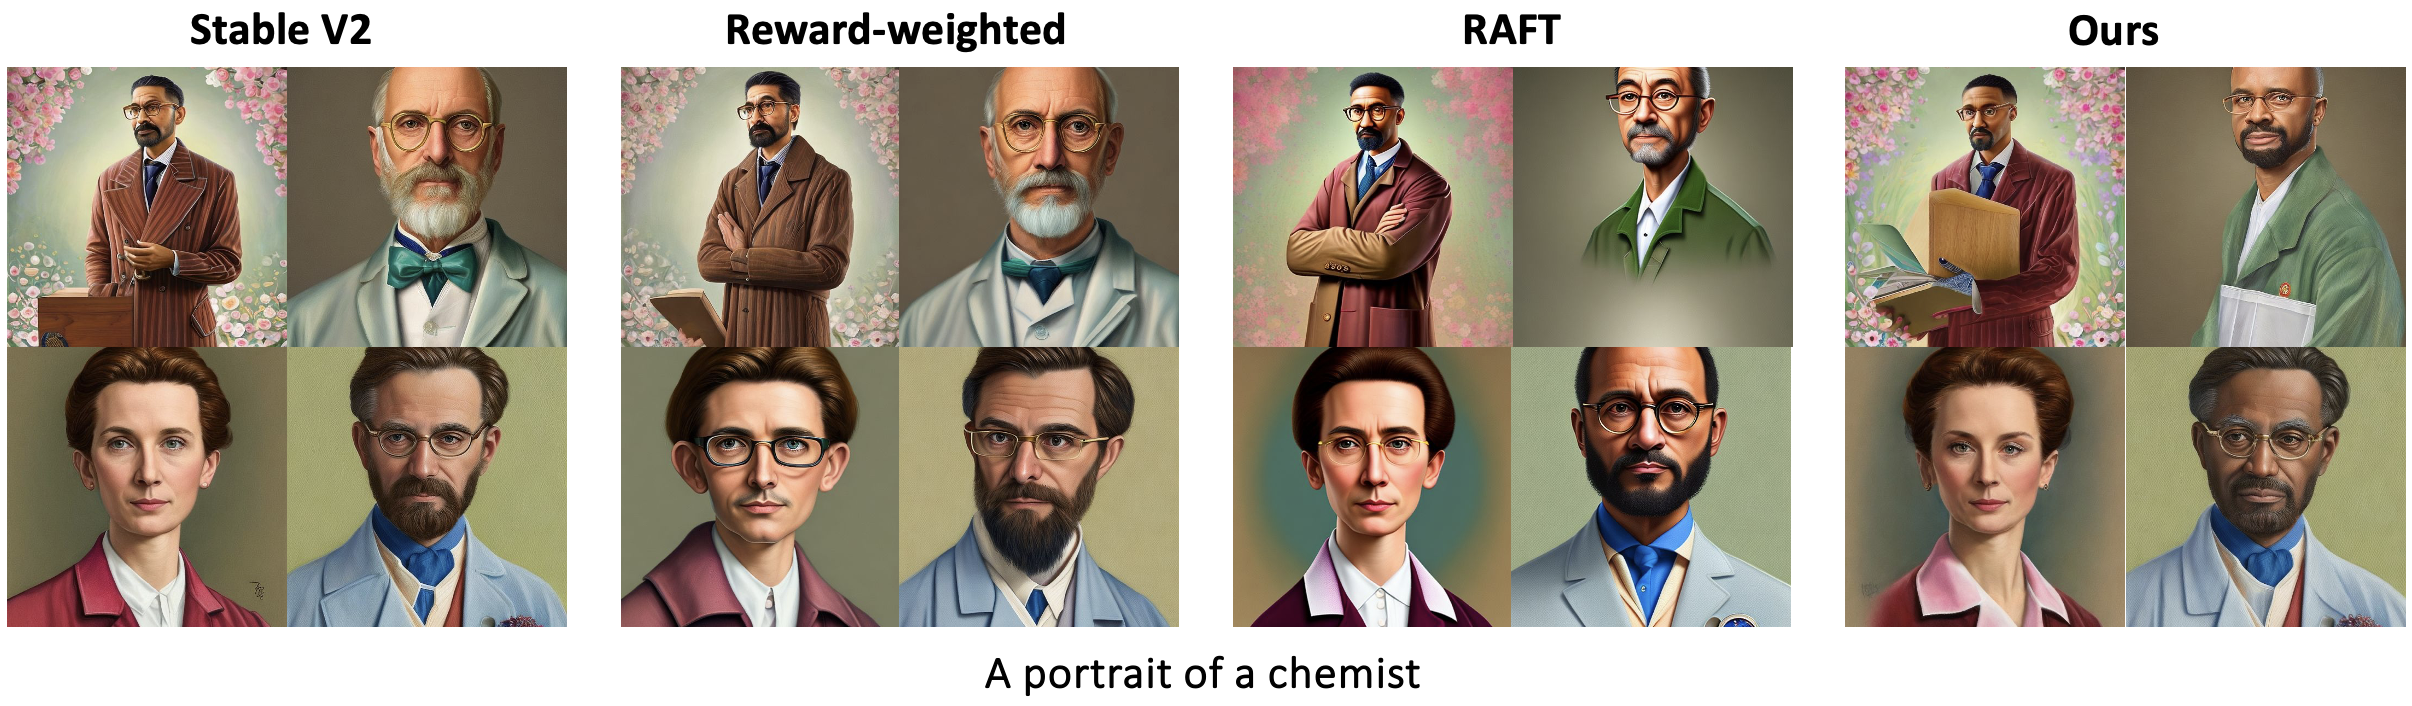 A portrait of a chemist